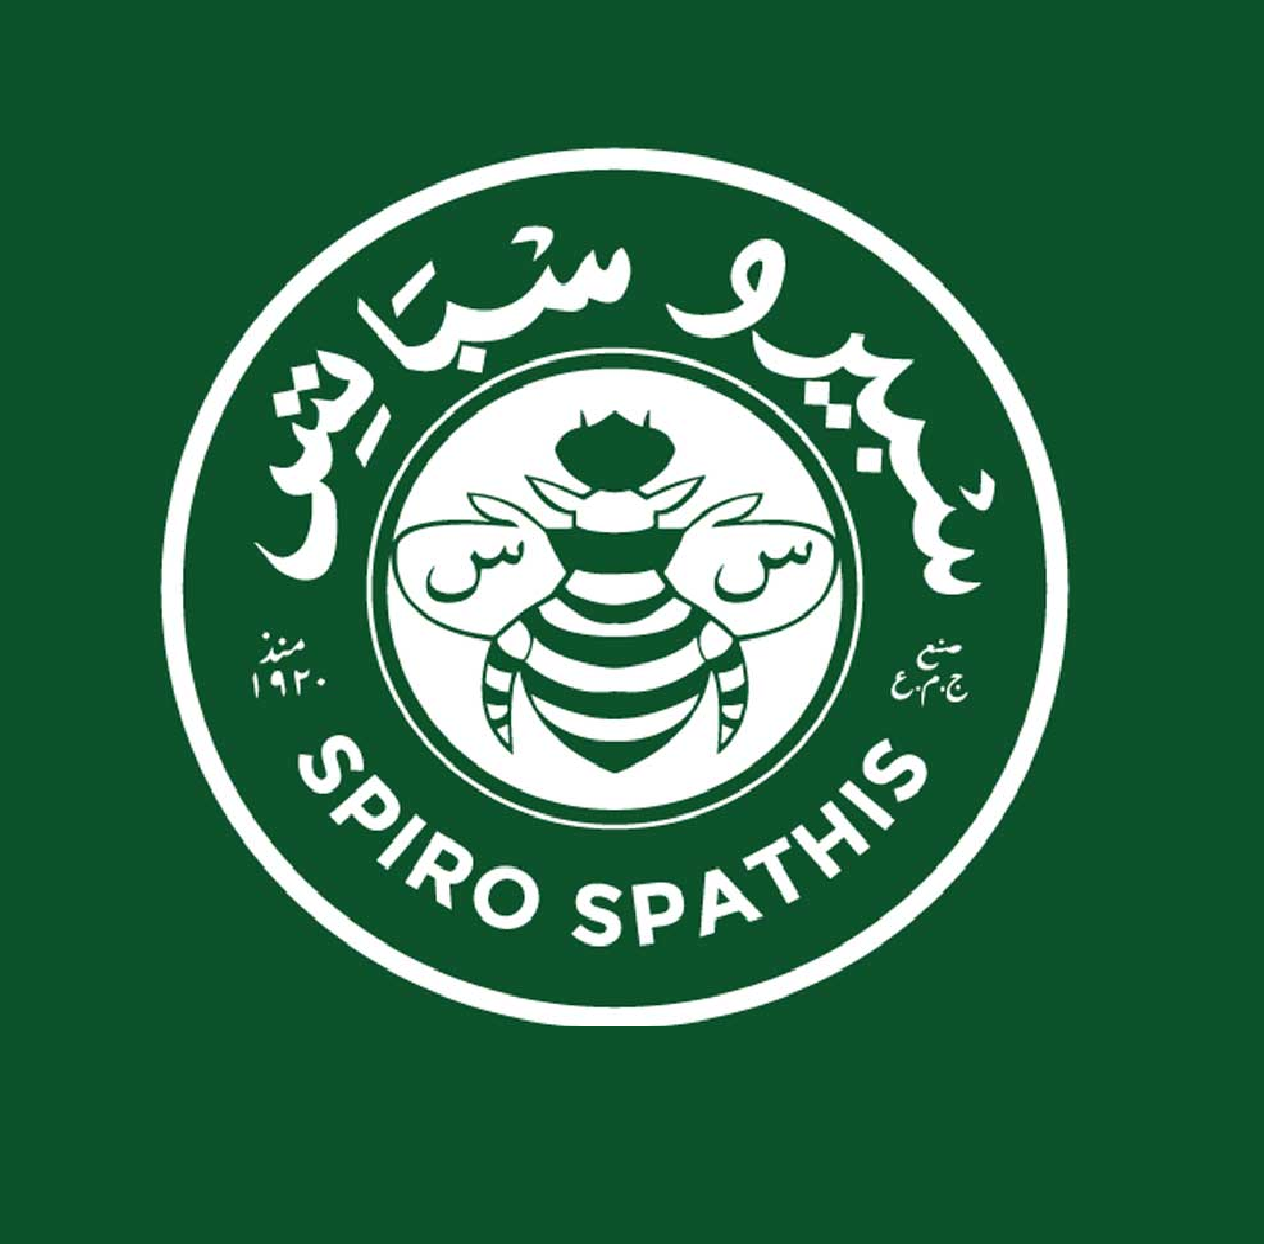 Spiro Spathis